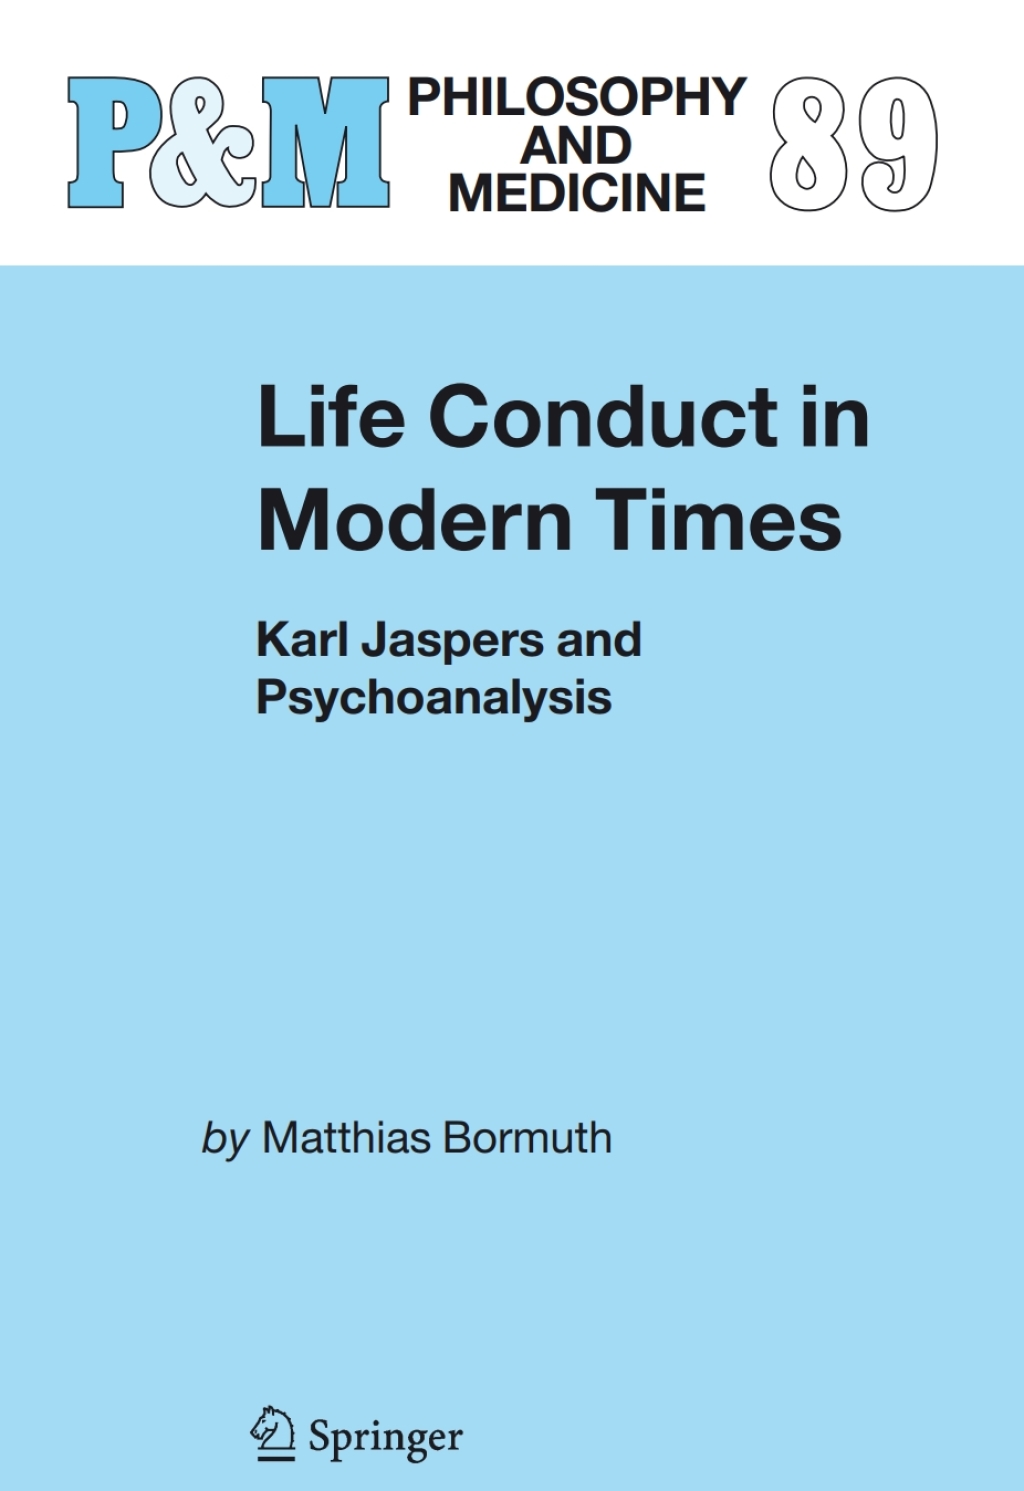 Life Conduct in Modern Times (eBook) - Matthias Bormuth,